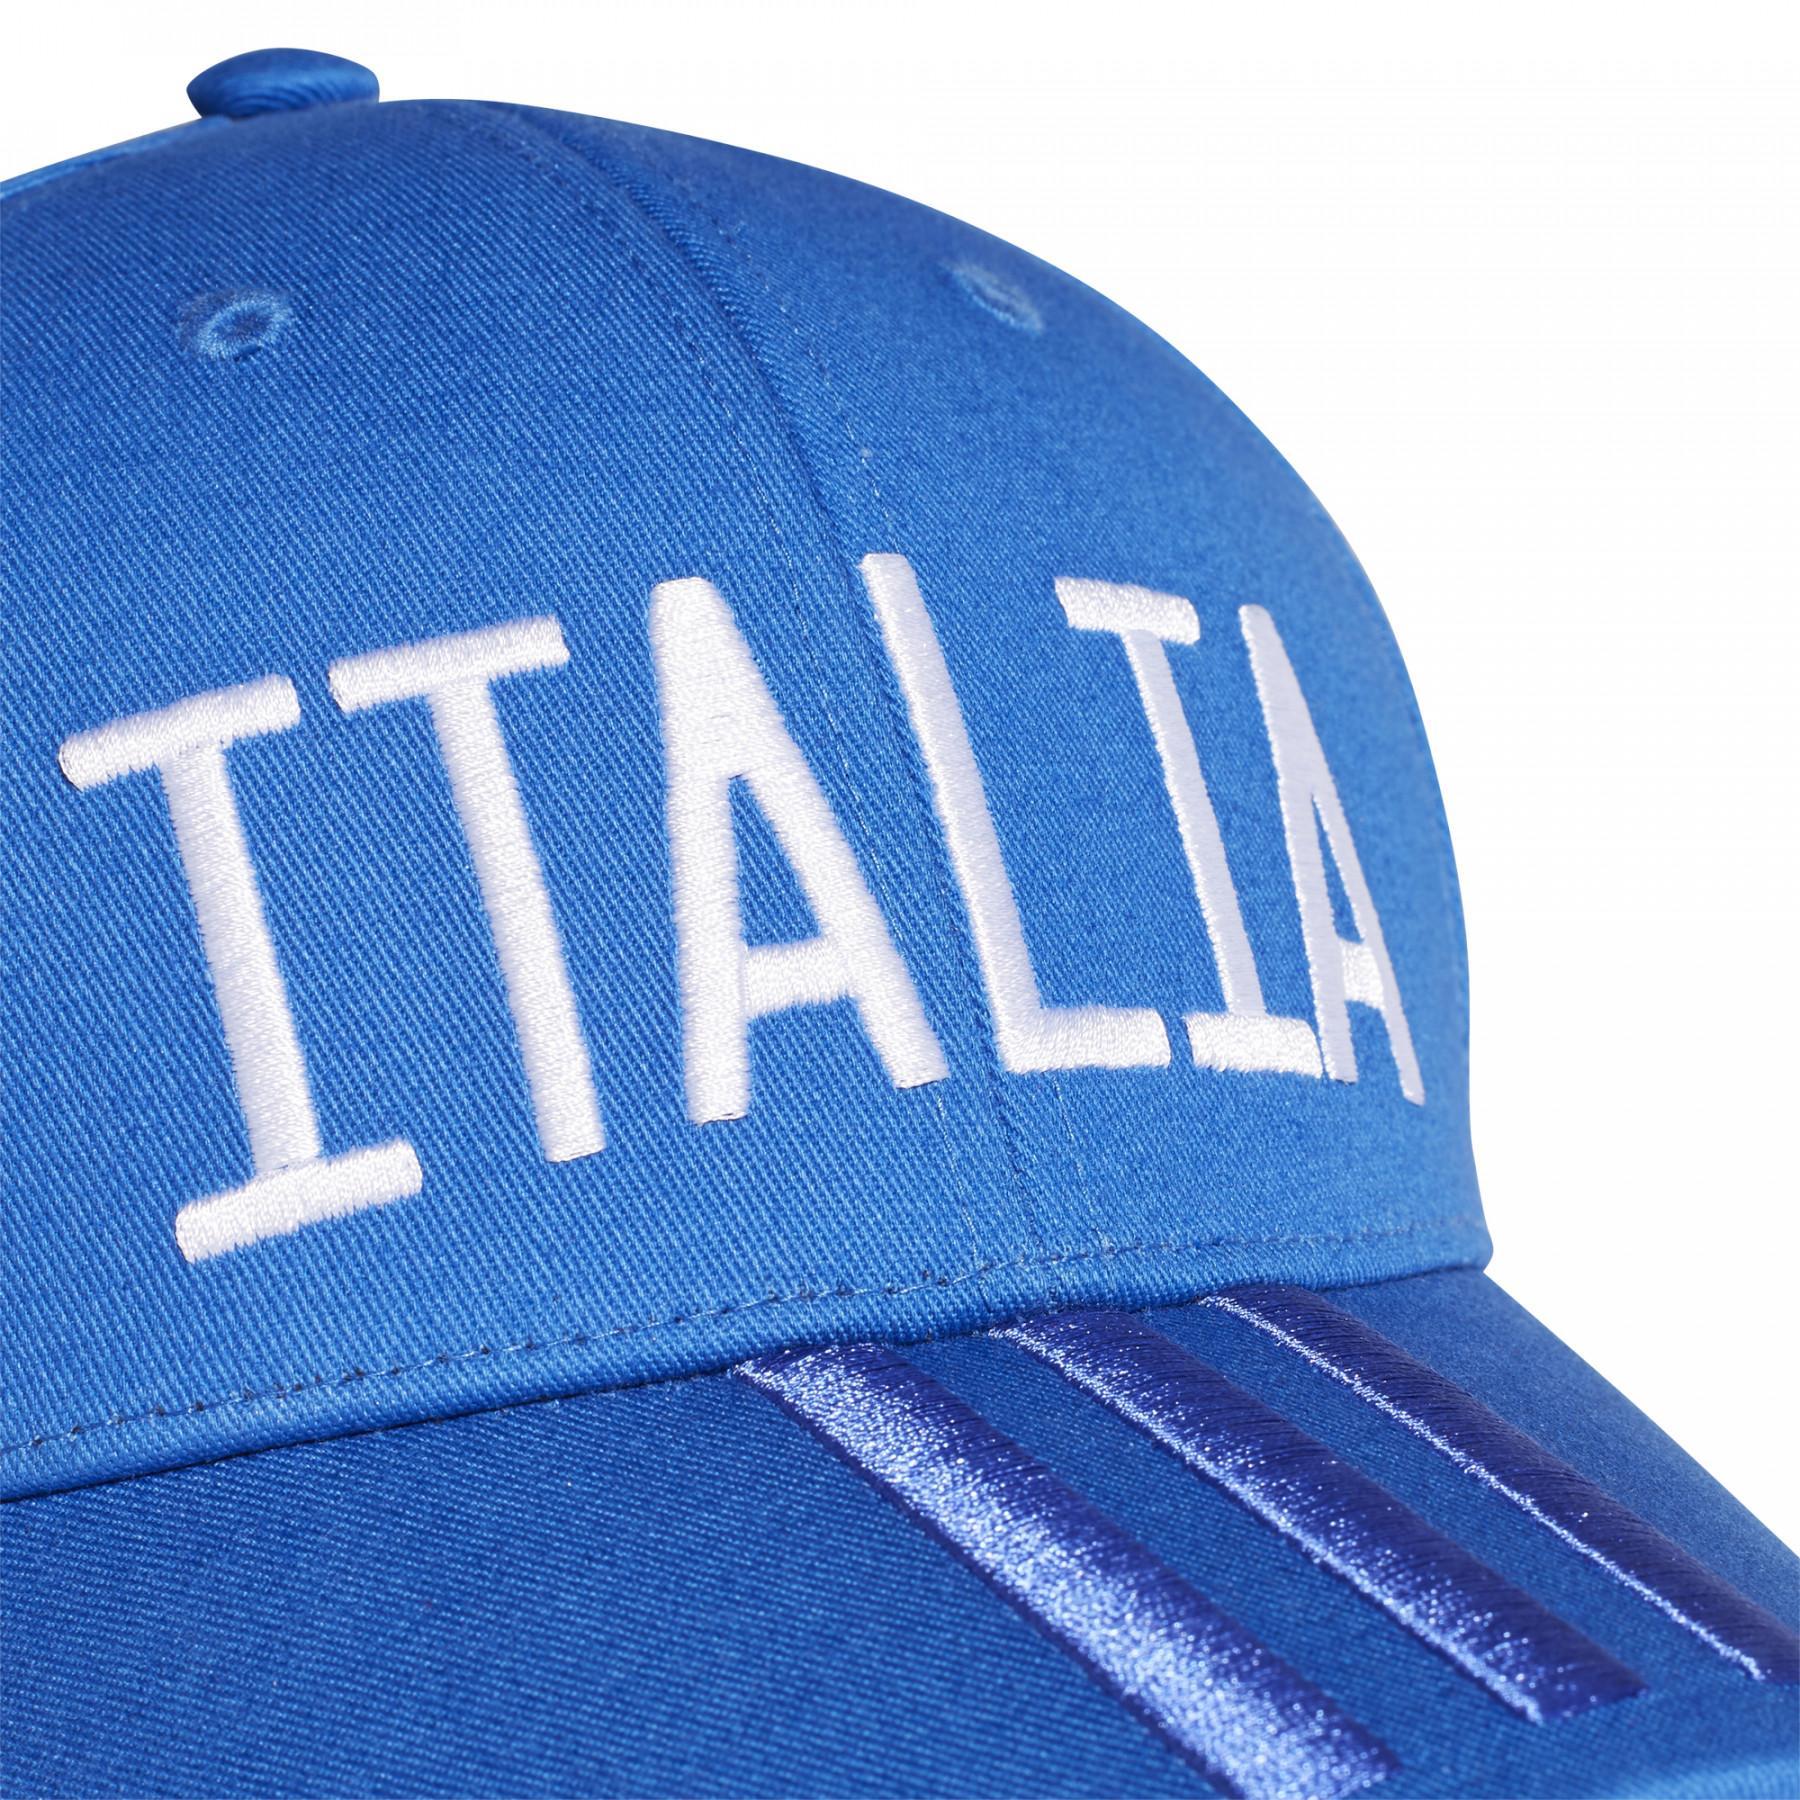 Casquette adidas Italie Fan Euro 2020